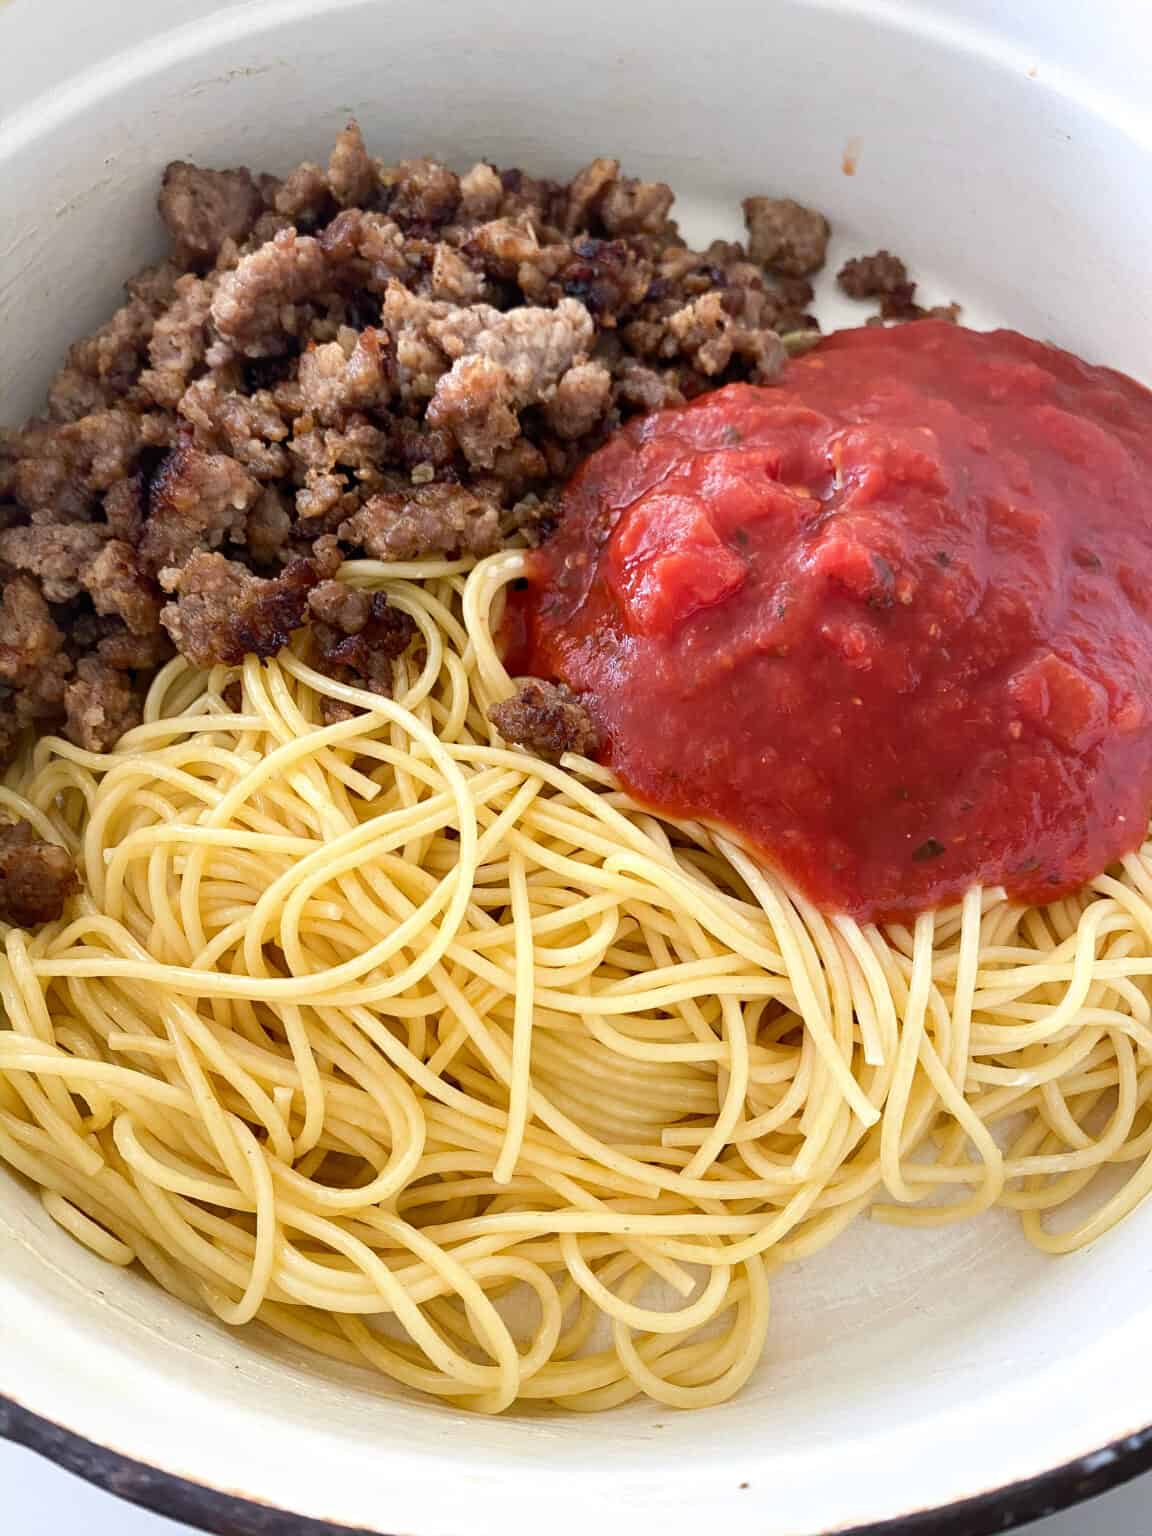 Red and White Baked Spaghetti Recipe - Easy Pasta Dinner Idea!